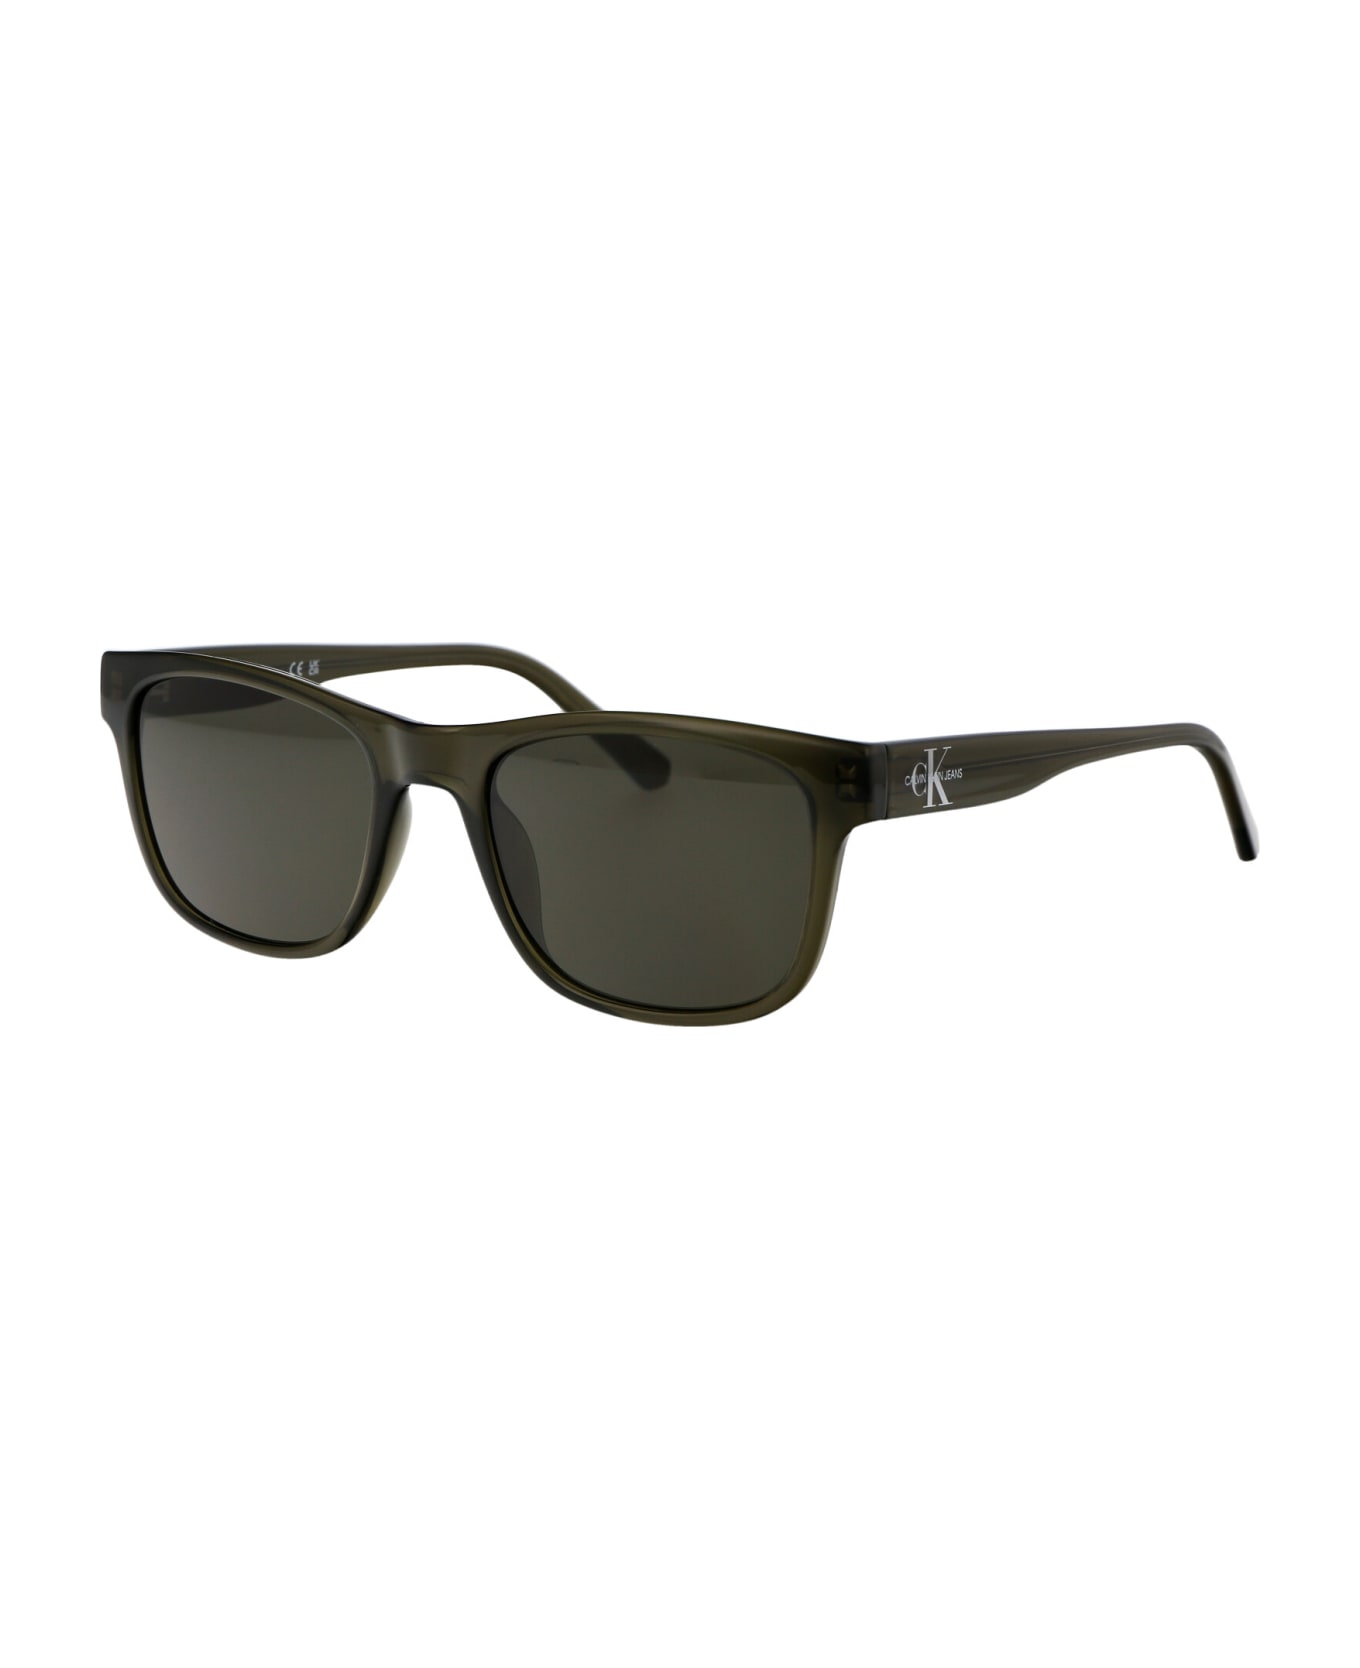 Calvin Klein Jeans Ckj20632s Sunglasses - 314 CRYSTAL OLIVE